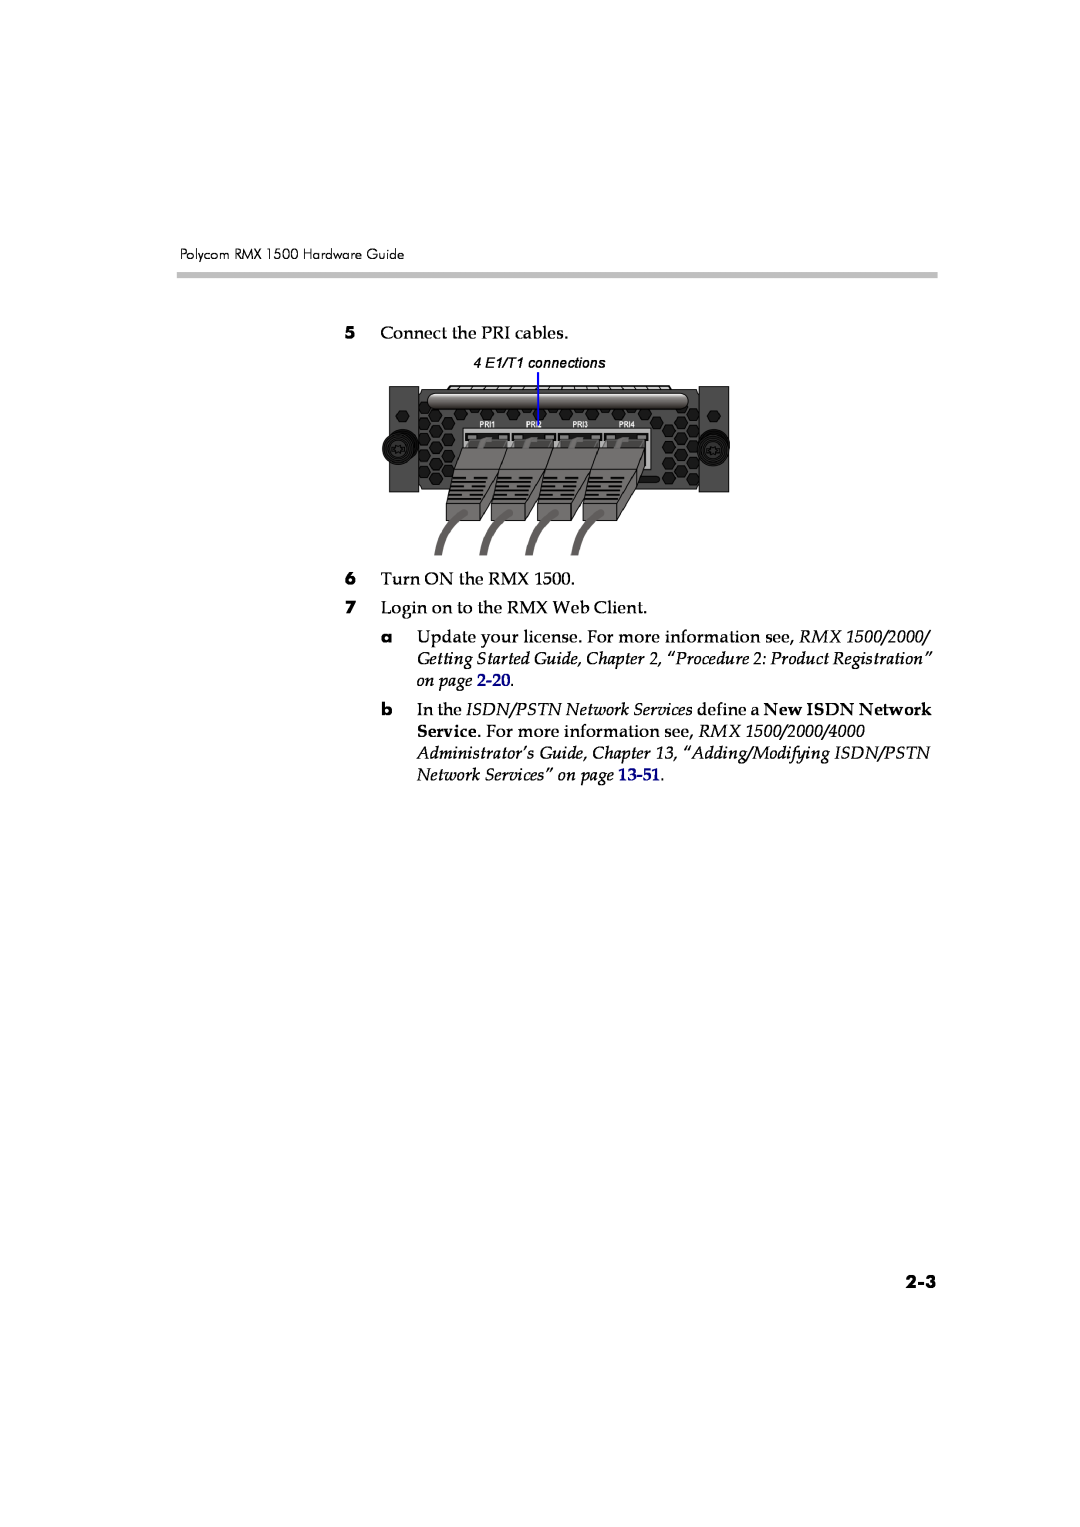 Polycom DOC2557A manual Connect the PRI cables 